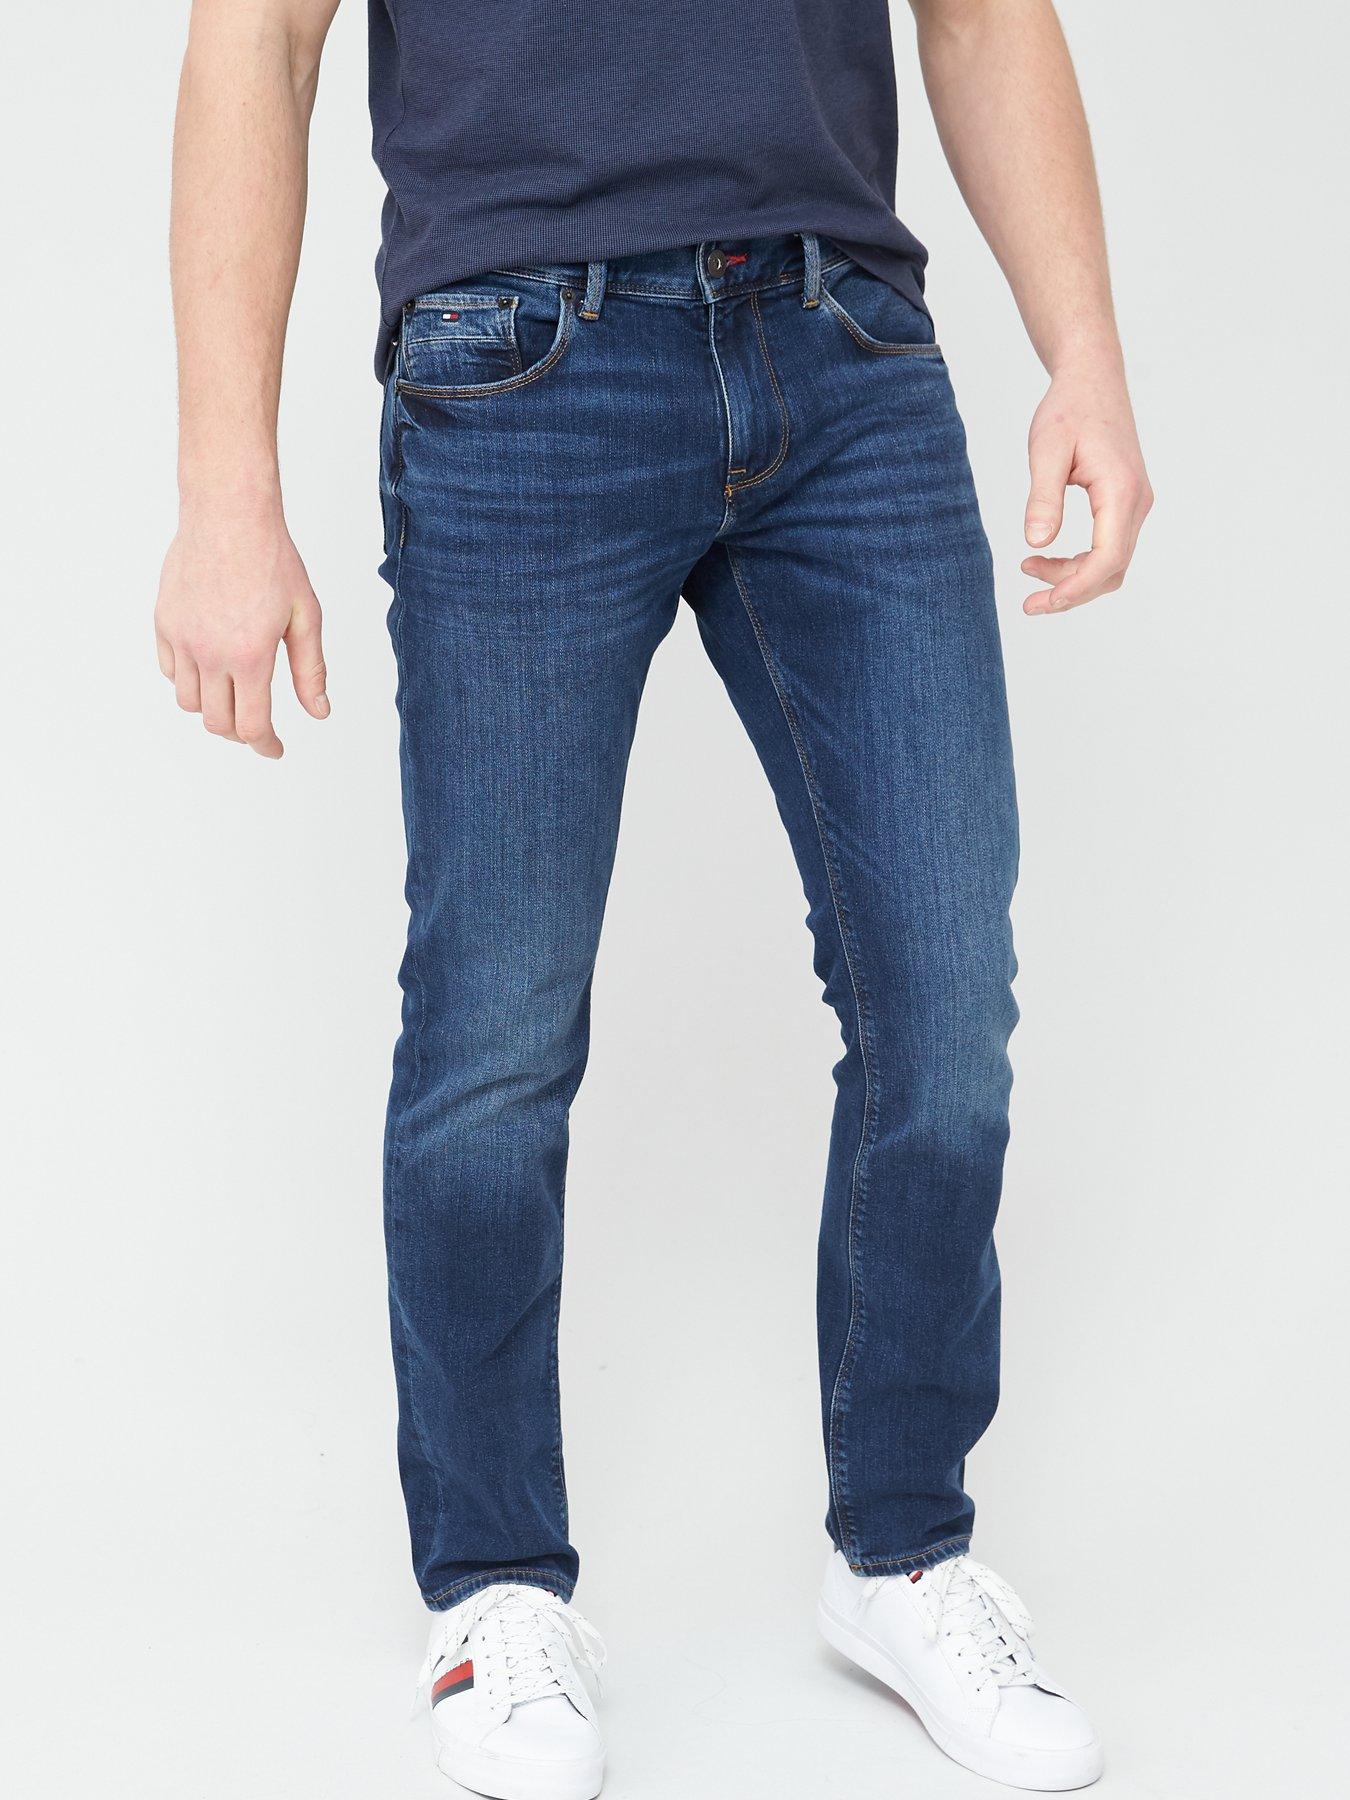 denton jeans tommy hilfiger